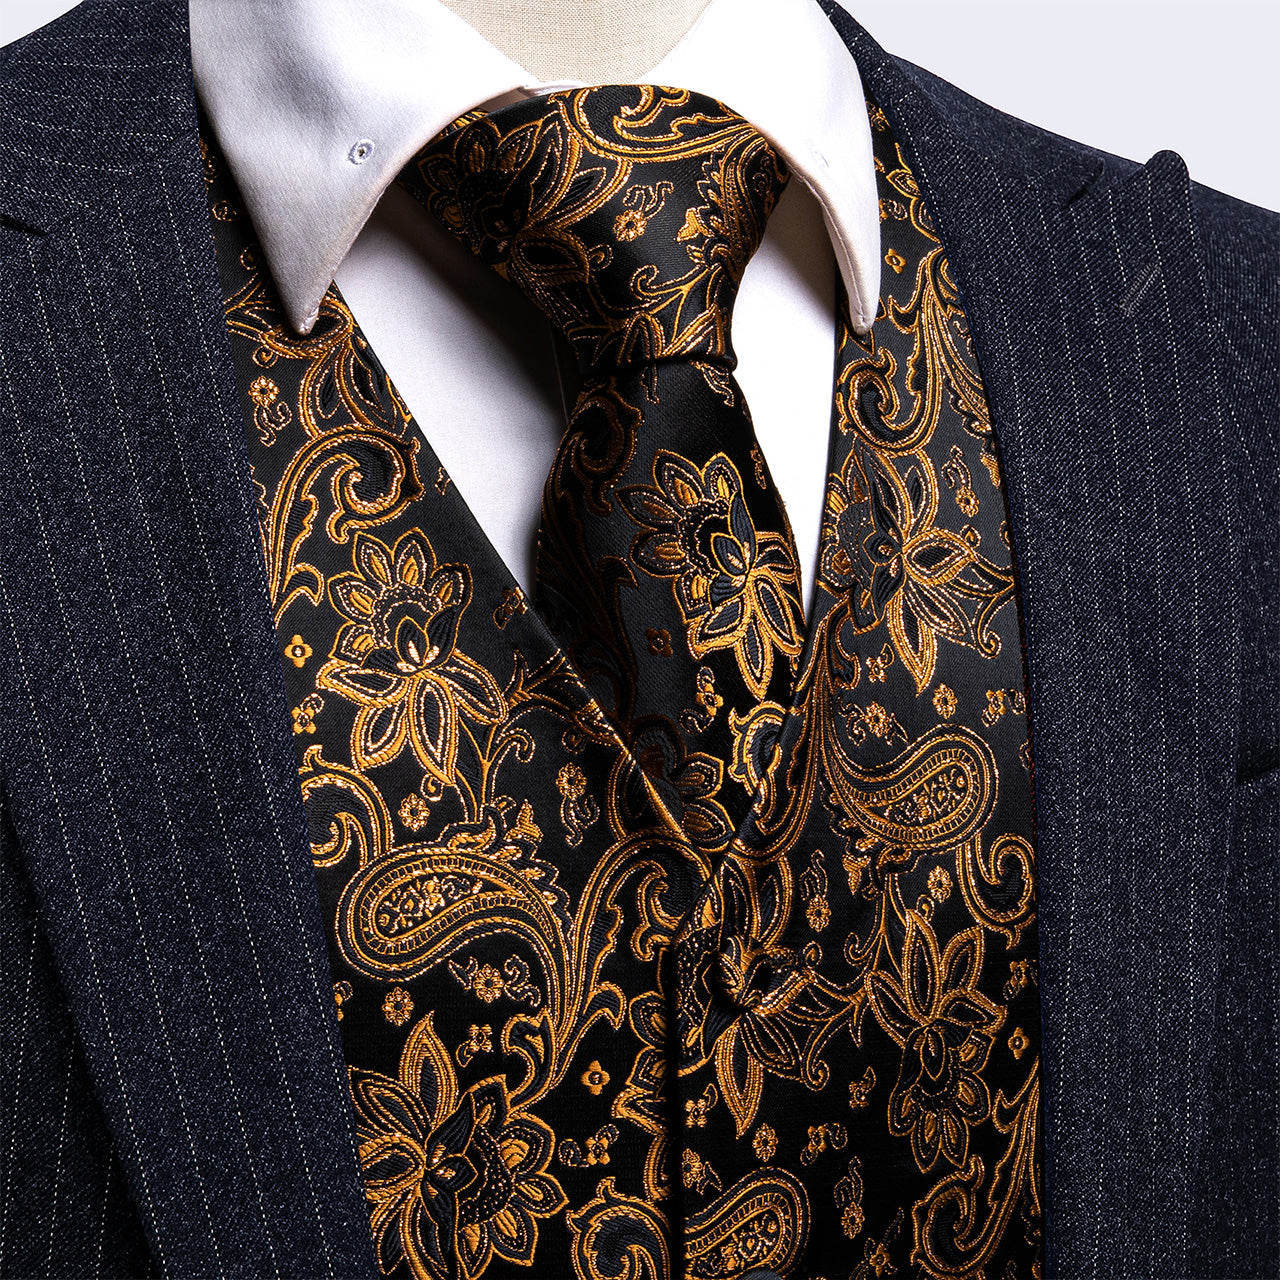 Men's Black Gold Floral Silk Vest Tie Set